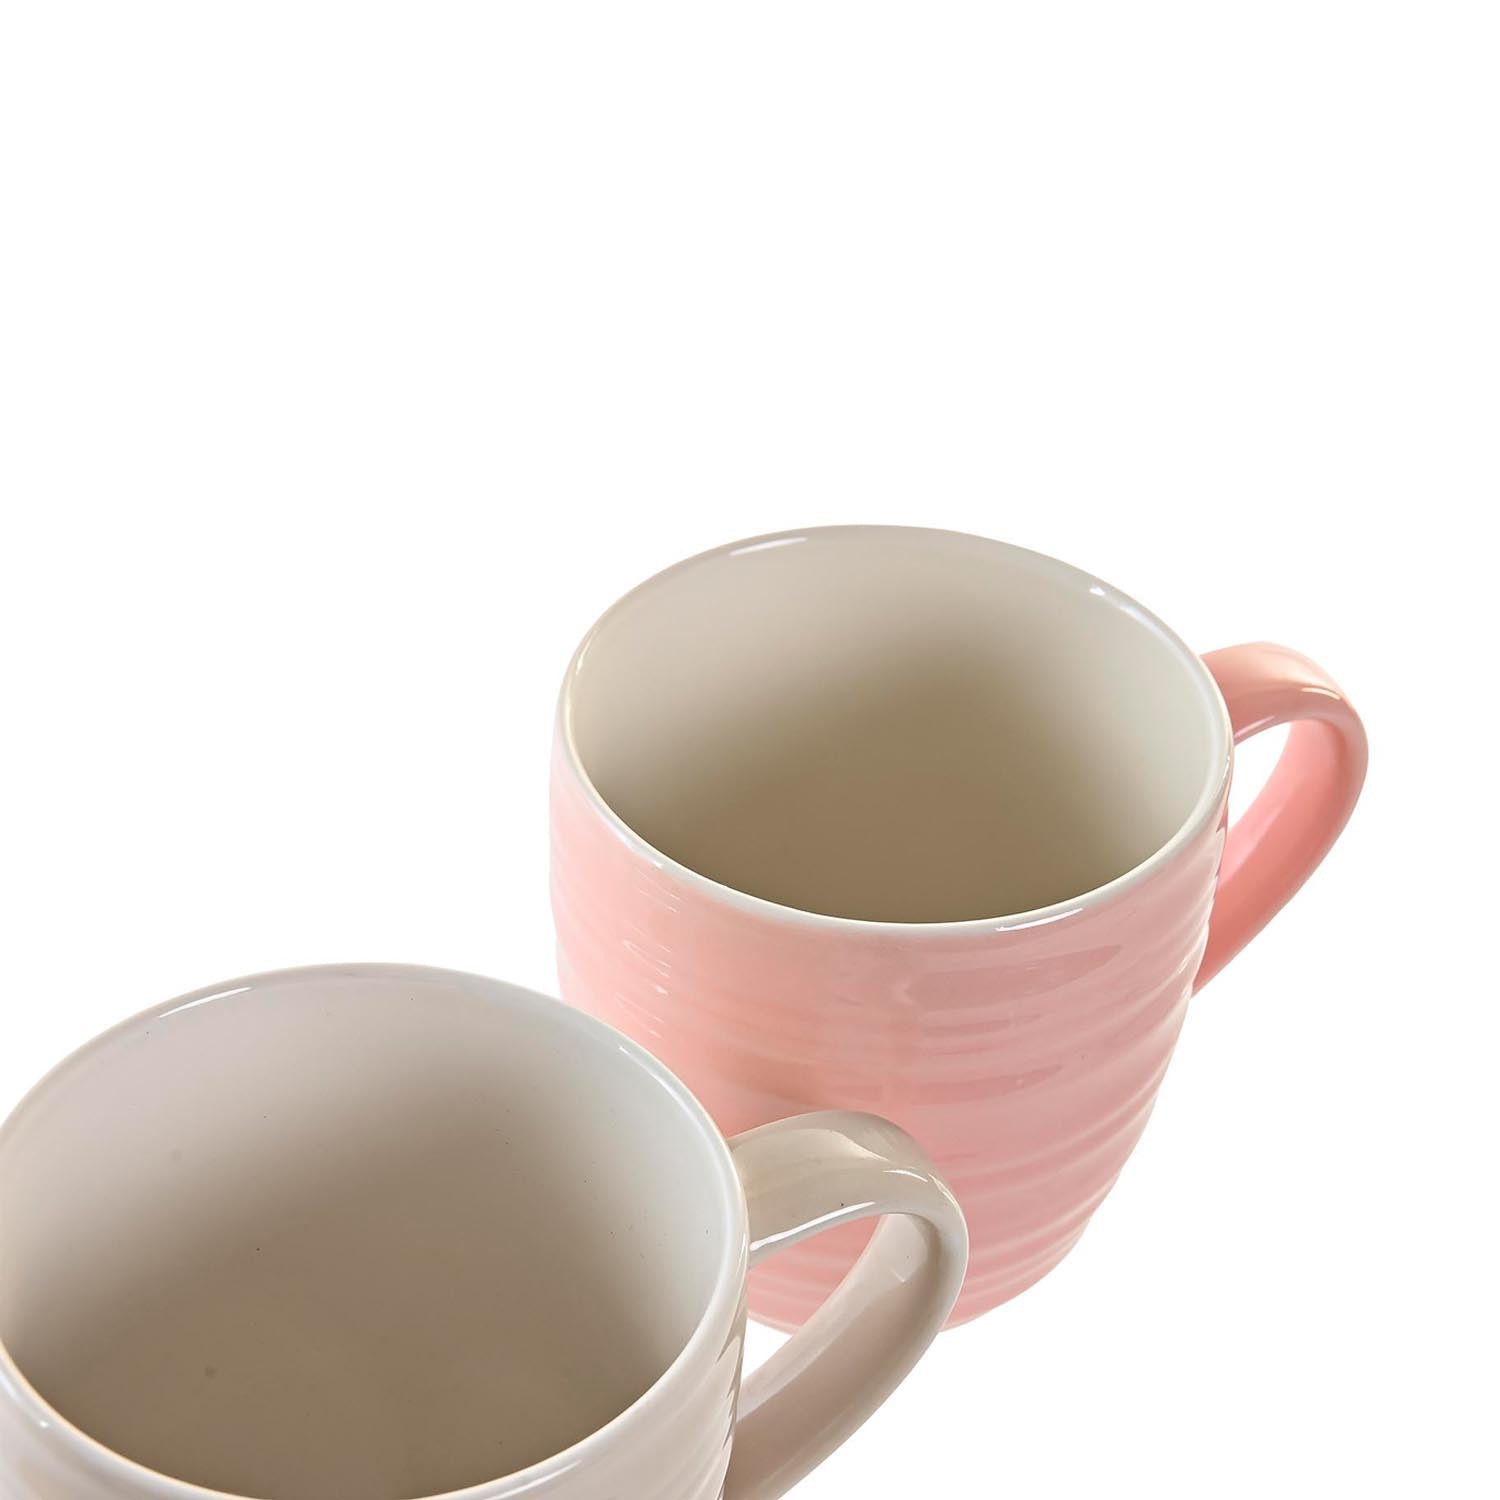 Lined mug set